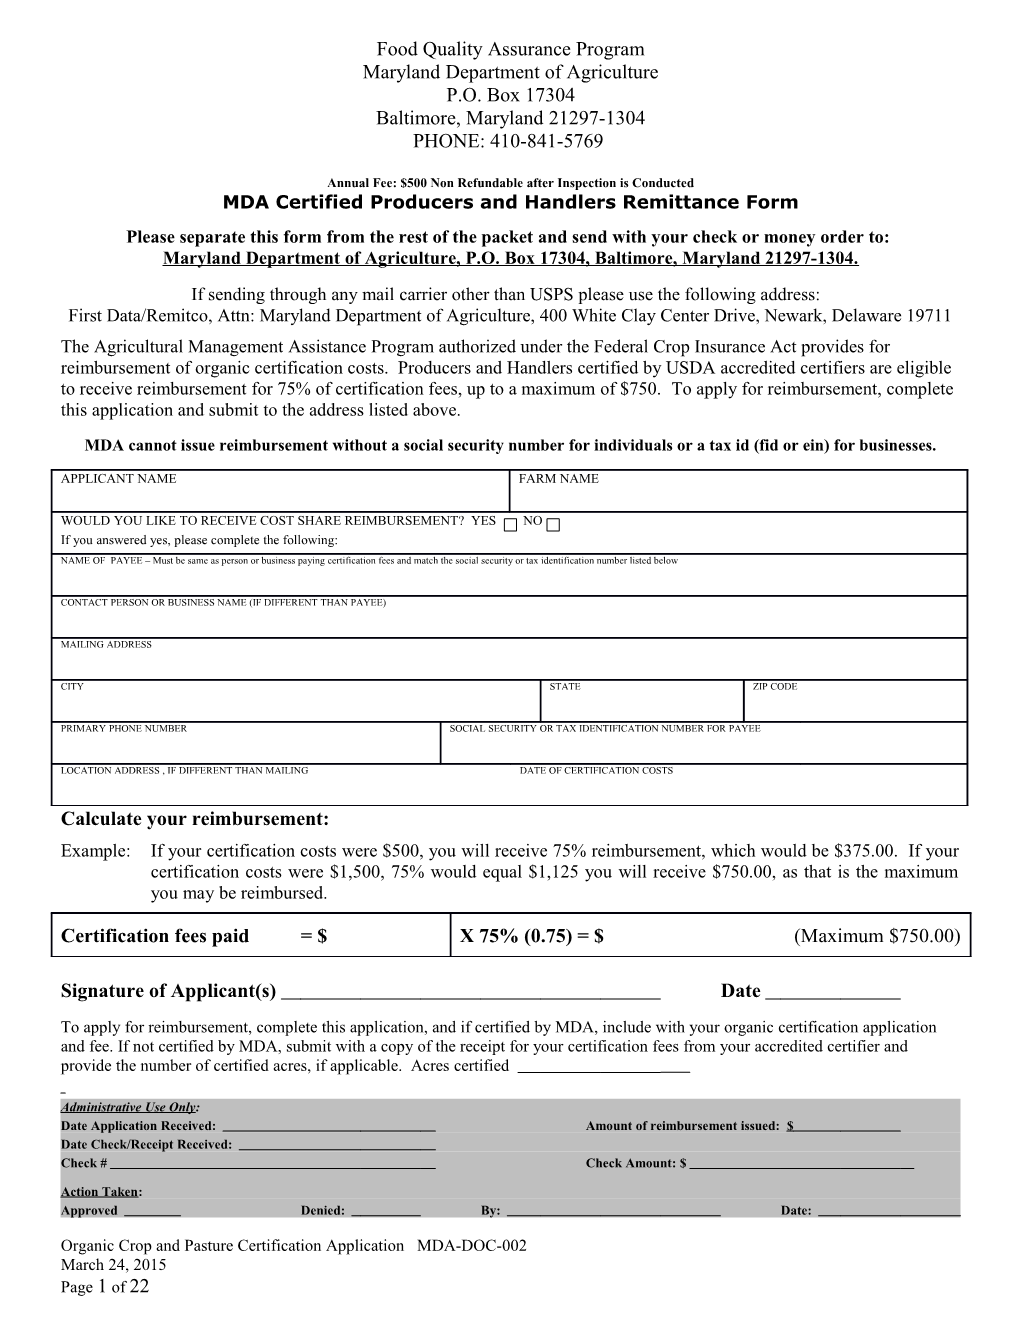 MDA DOC 002Crop and Pasture New Applicants 03.24.15